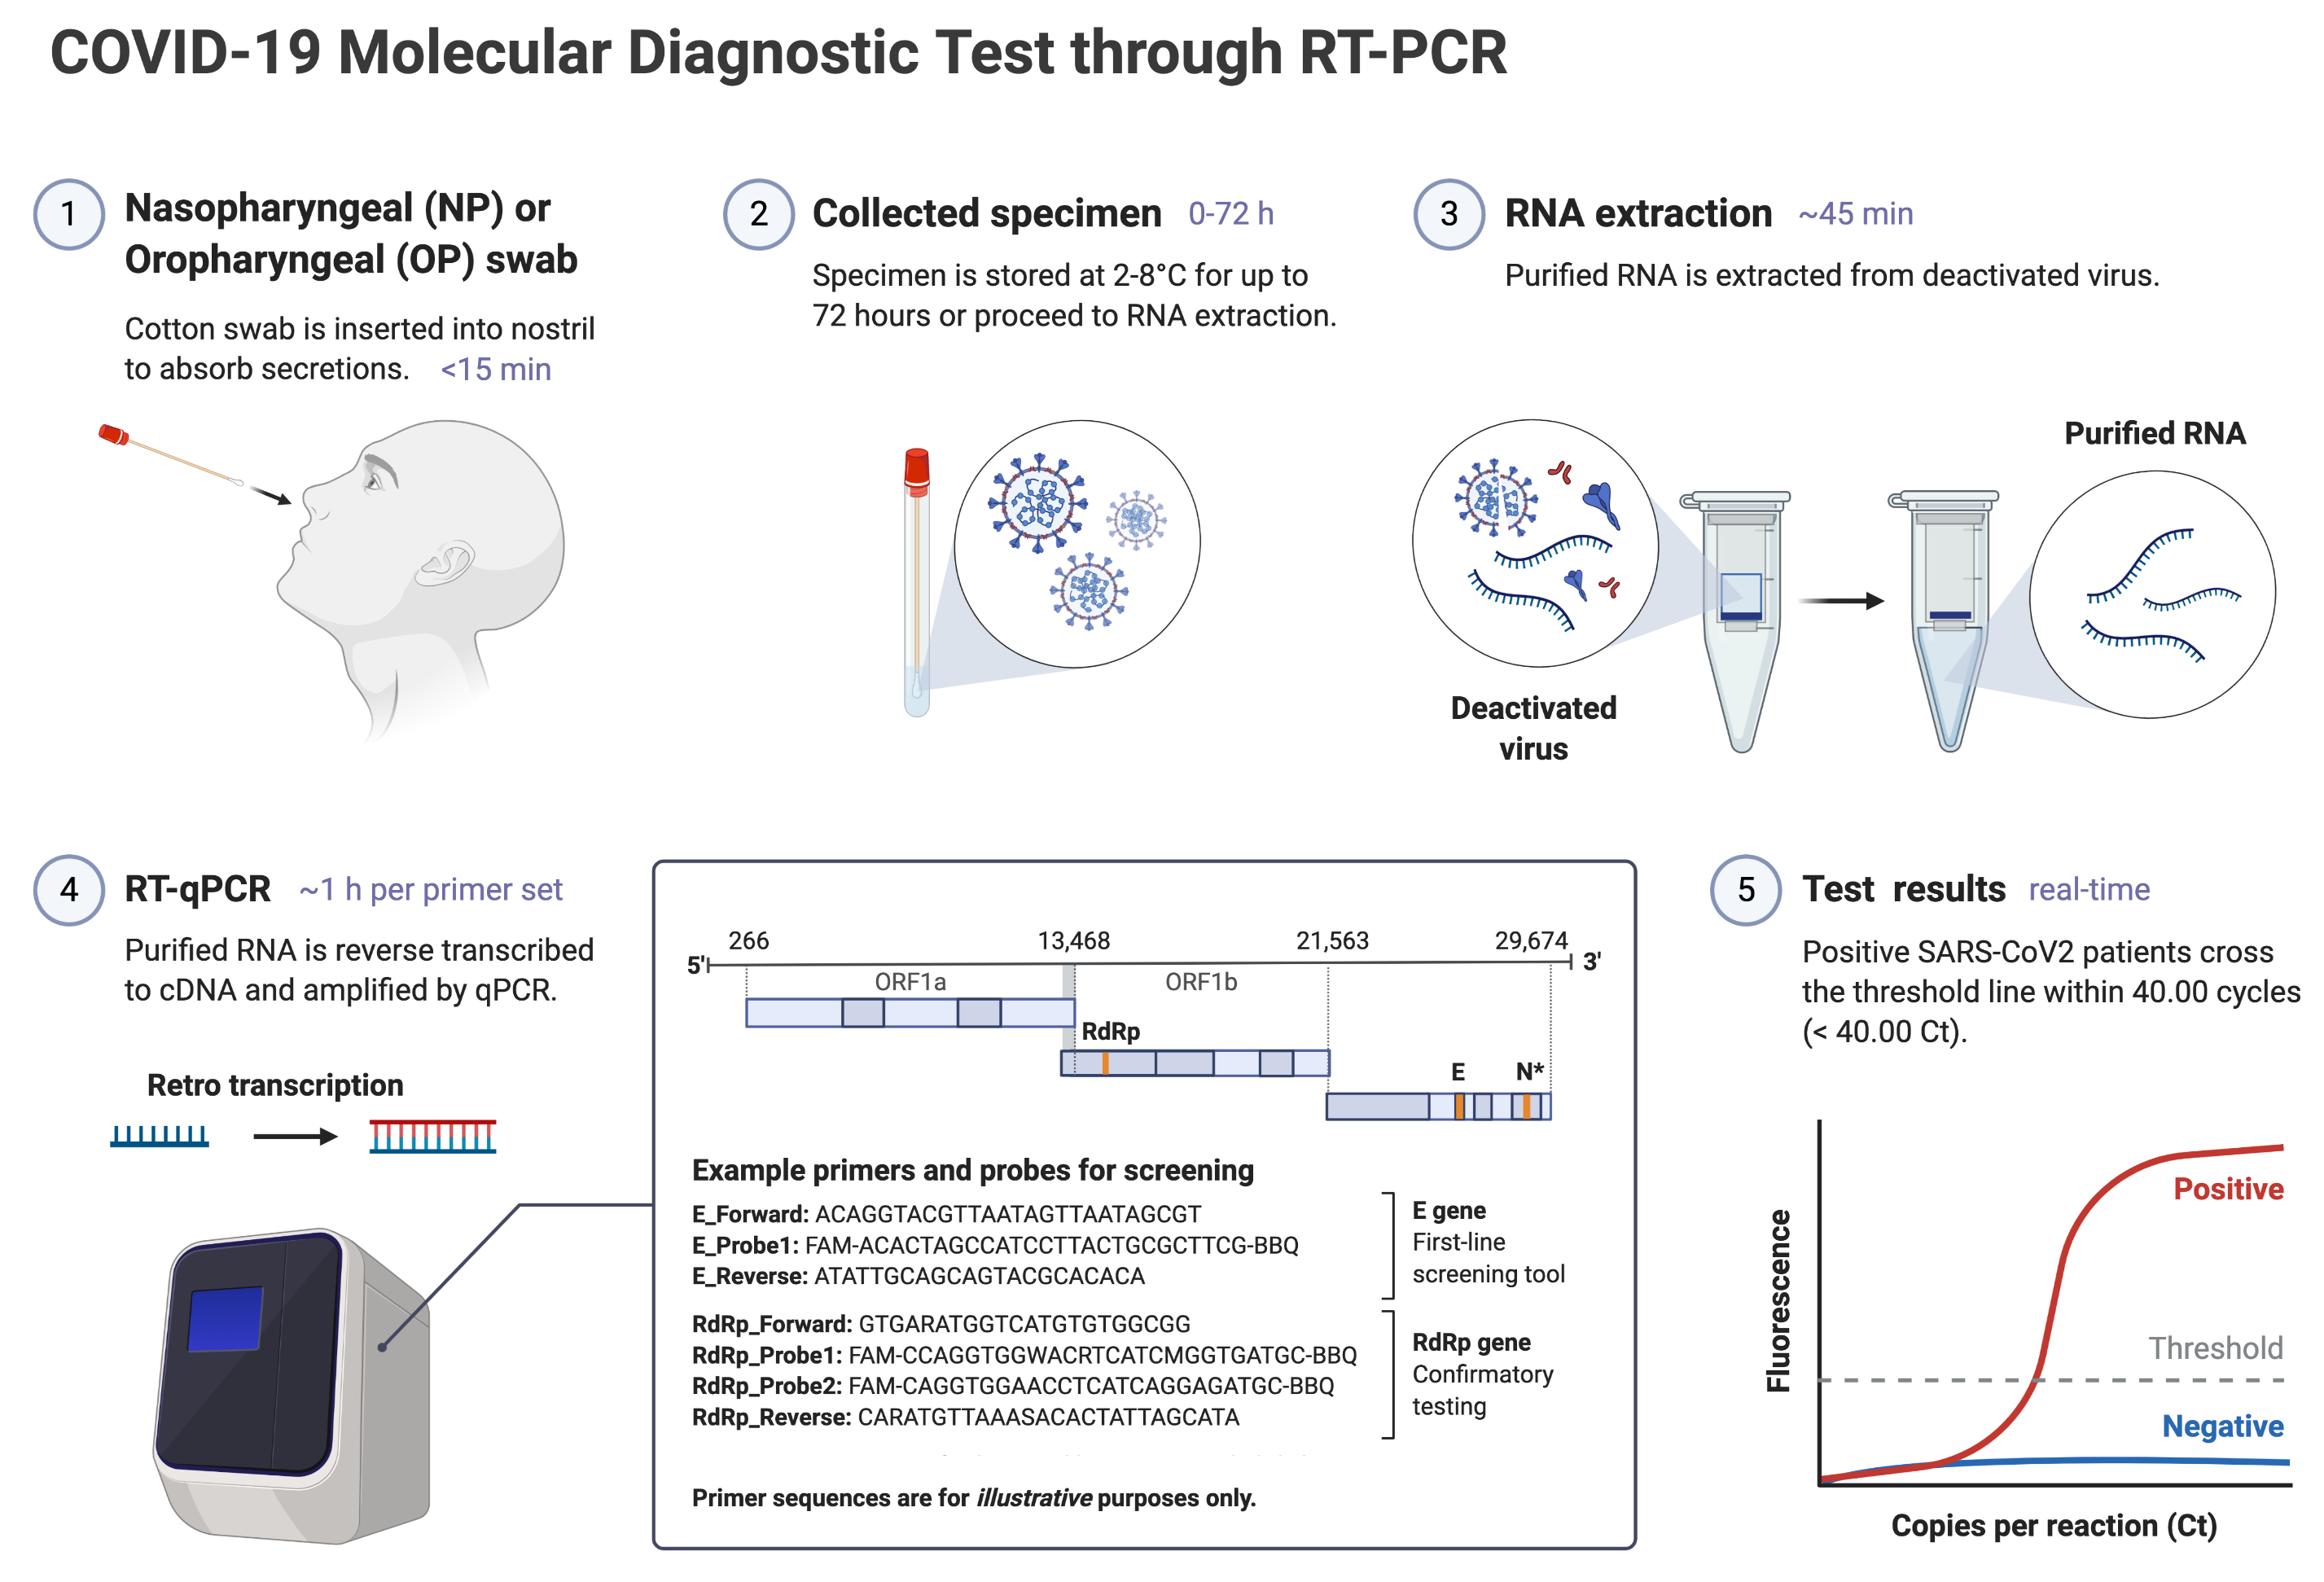 COVID-19 Molecular Diagnostic through RT-PCR